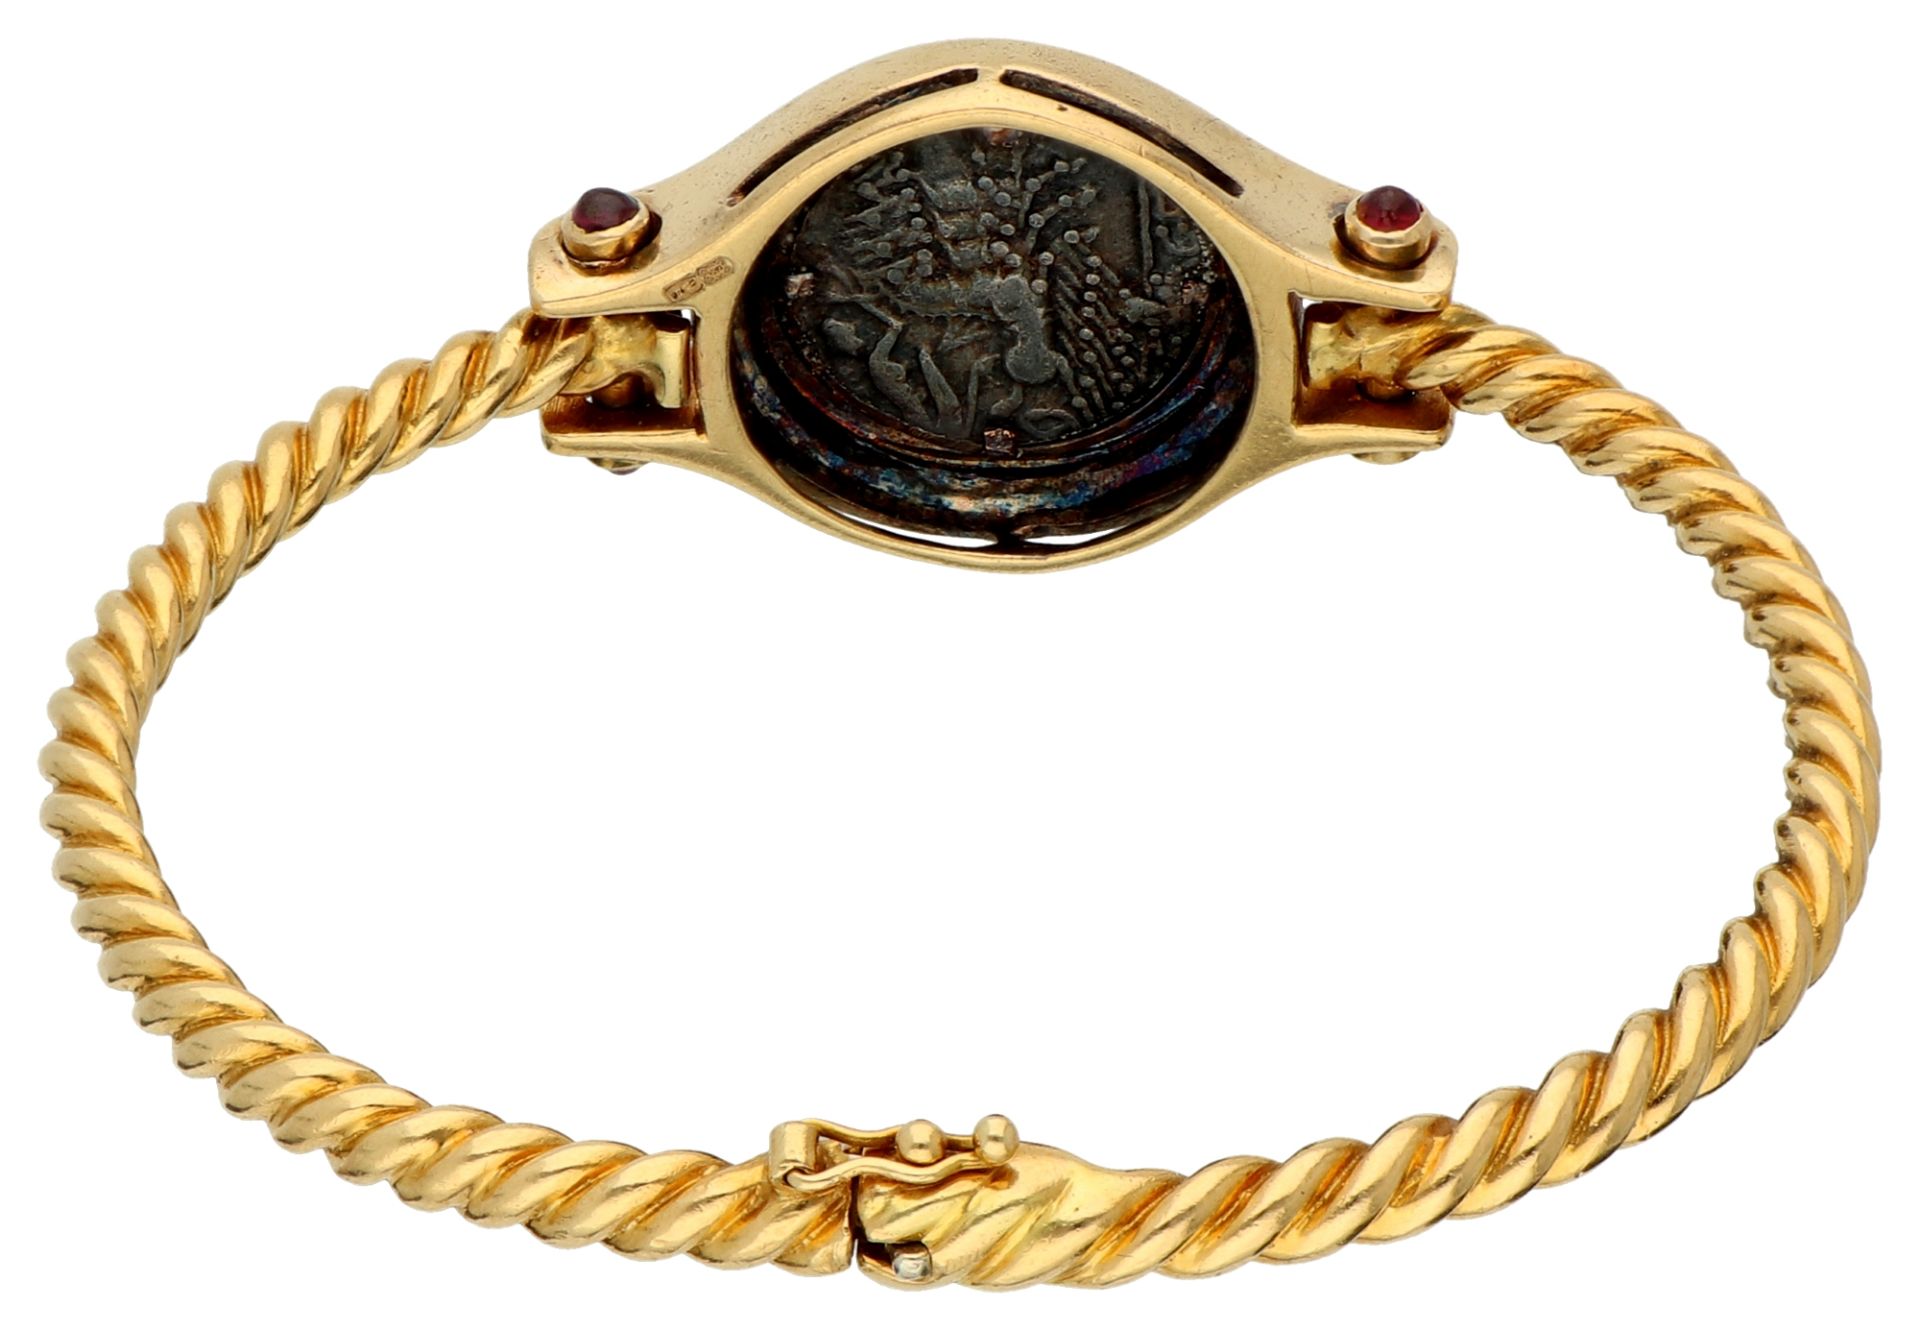 18K Yellow Gold bangle with antique silver Roman Denarius coin. - Image 3 of 3